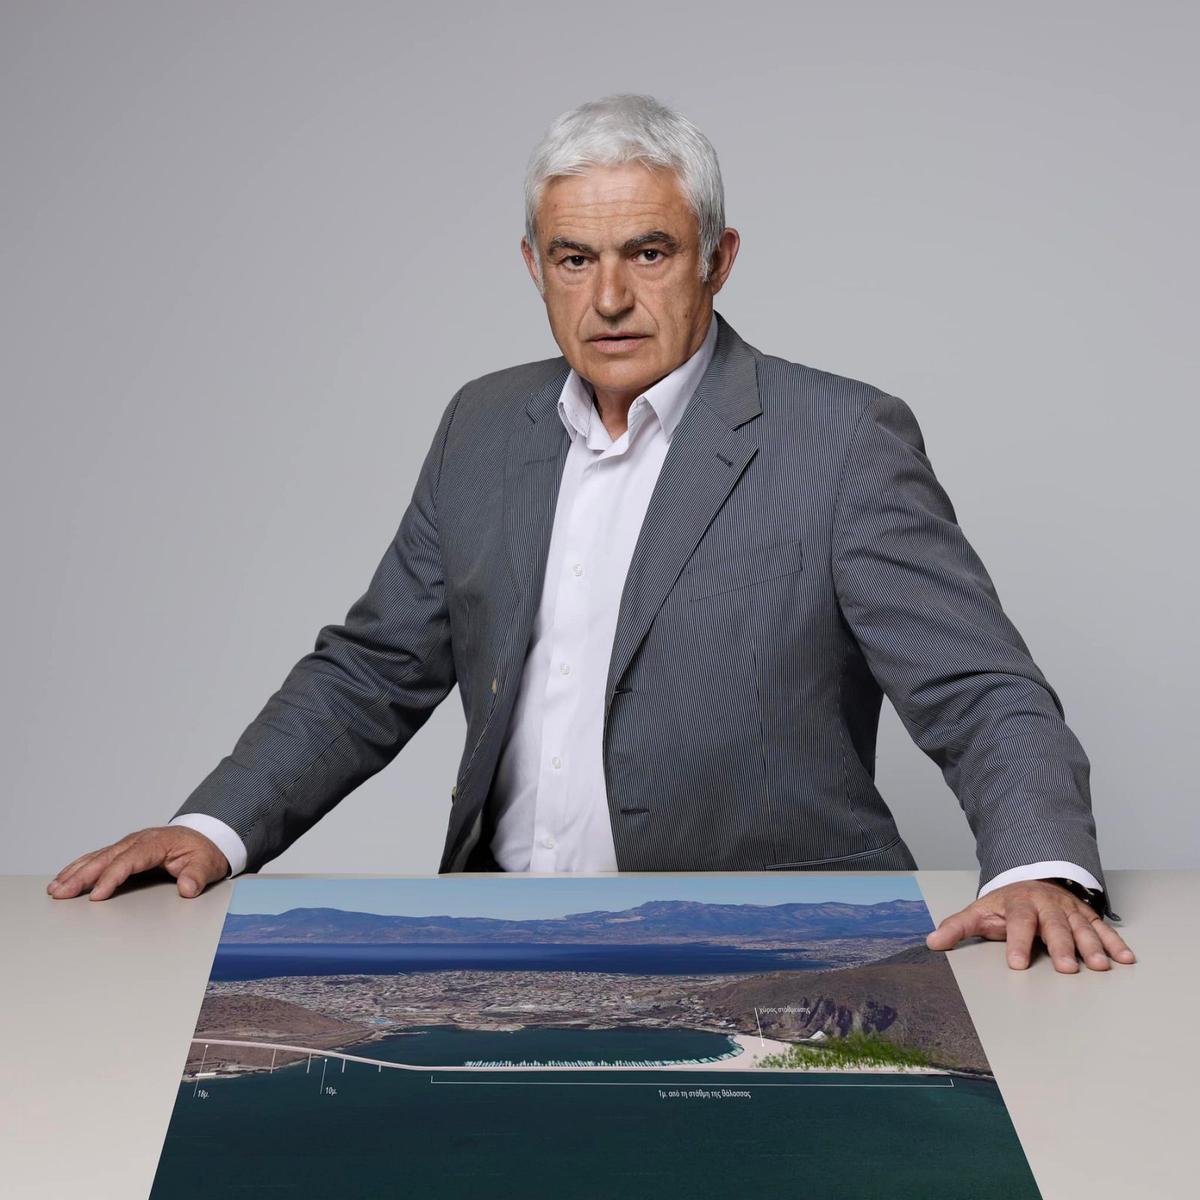 Cover Image for Κόμβος Αγ. Στεφάνου – Πρόταση του υποψήφιου Δημάρχου Χαλκιδέων Γιώργου Σπύρου